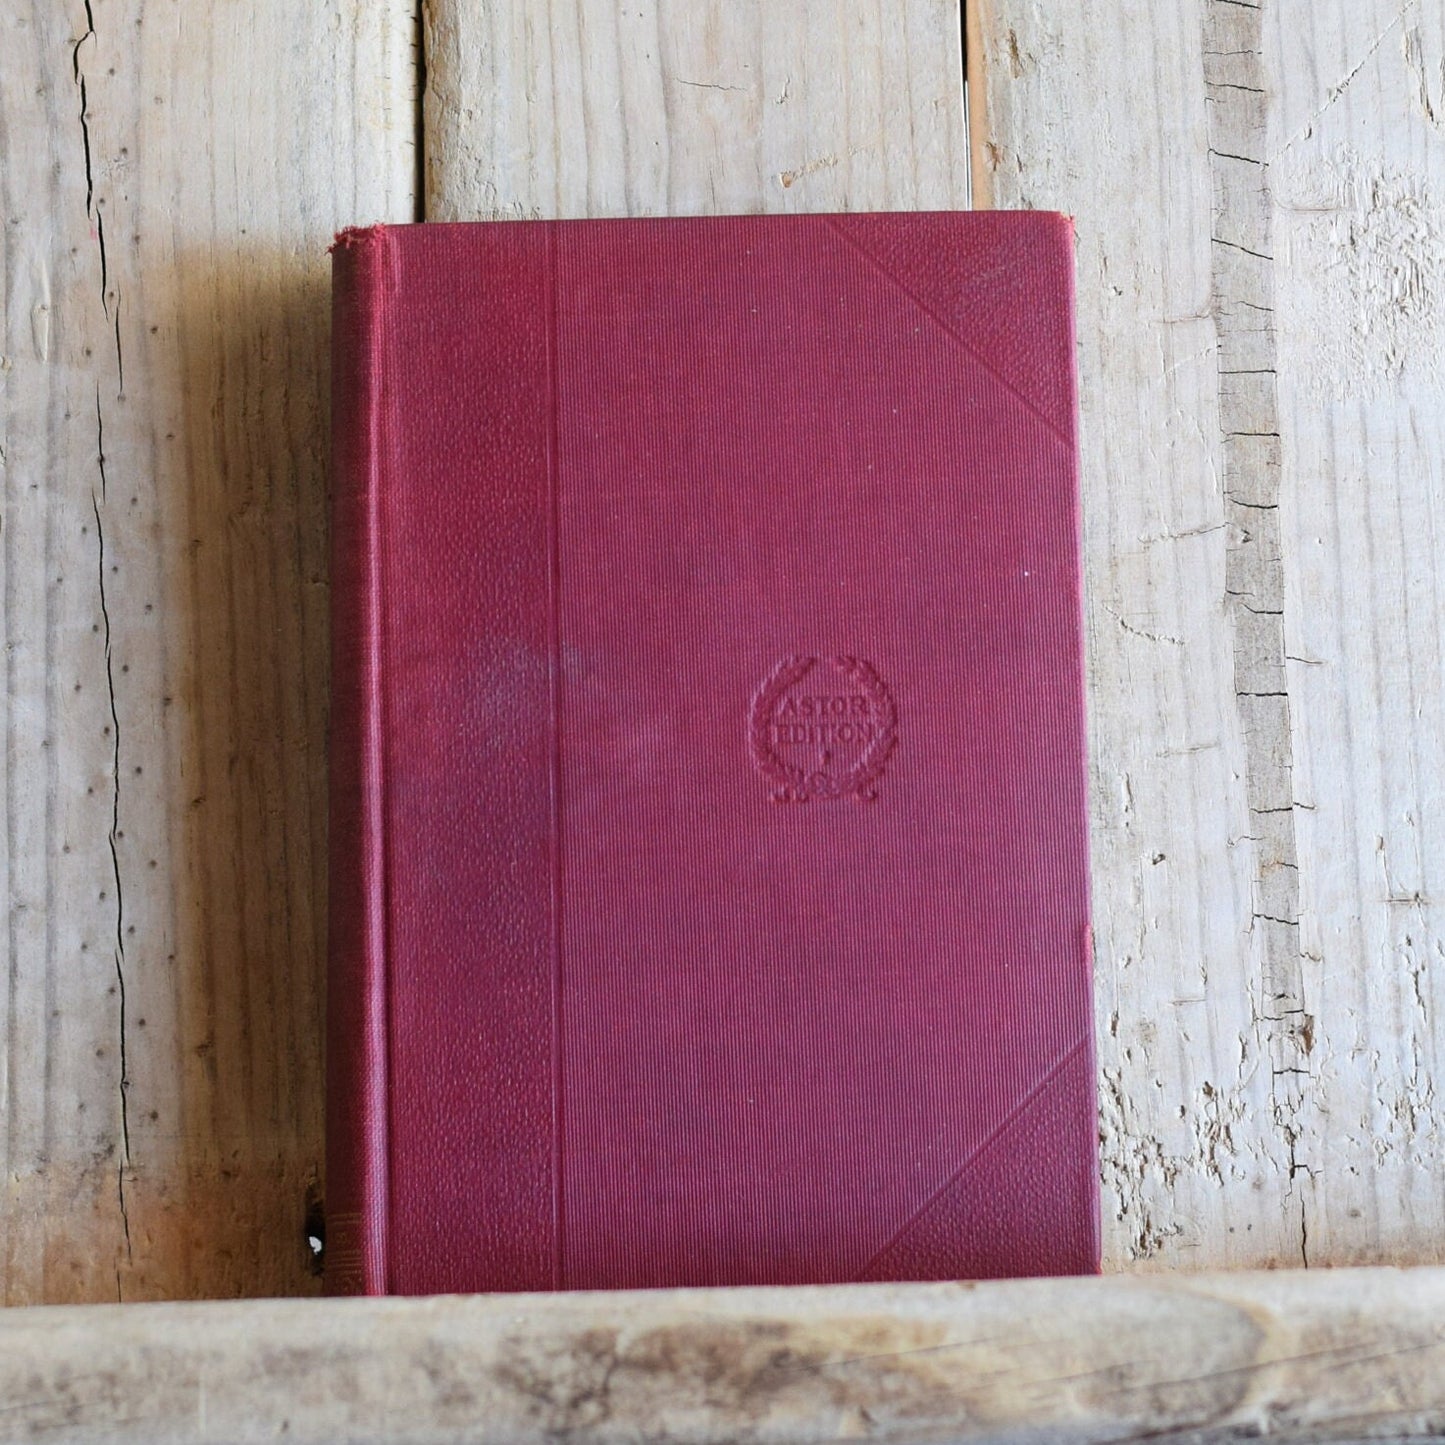 Vintage Fiction Hardback Poetry: Poems of Henry W Longfellow - Astor Edition 1901